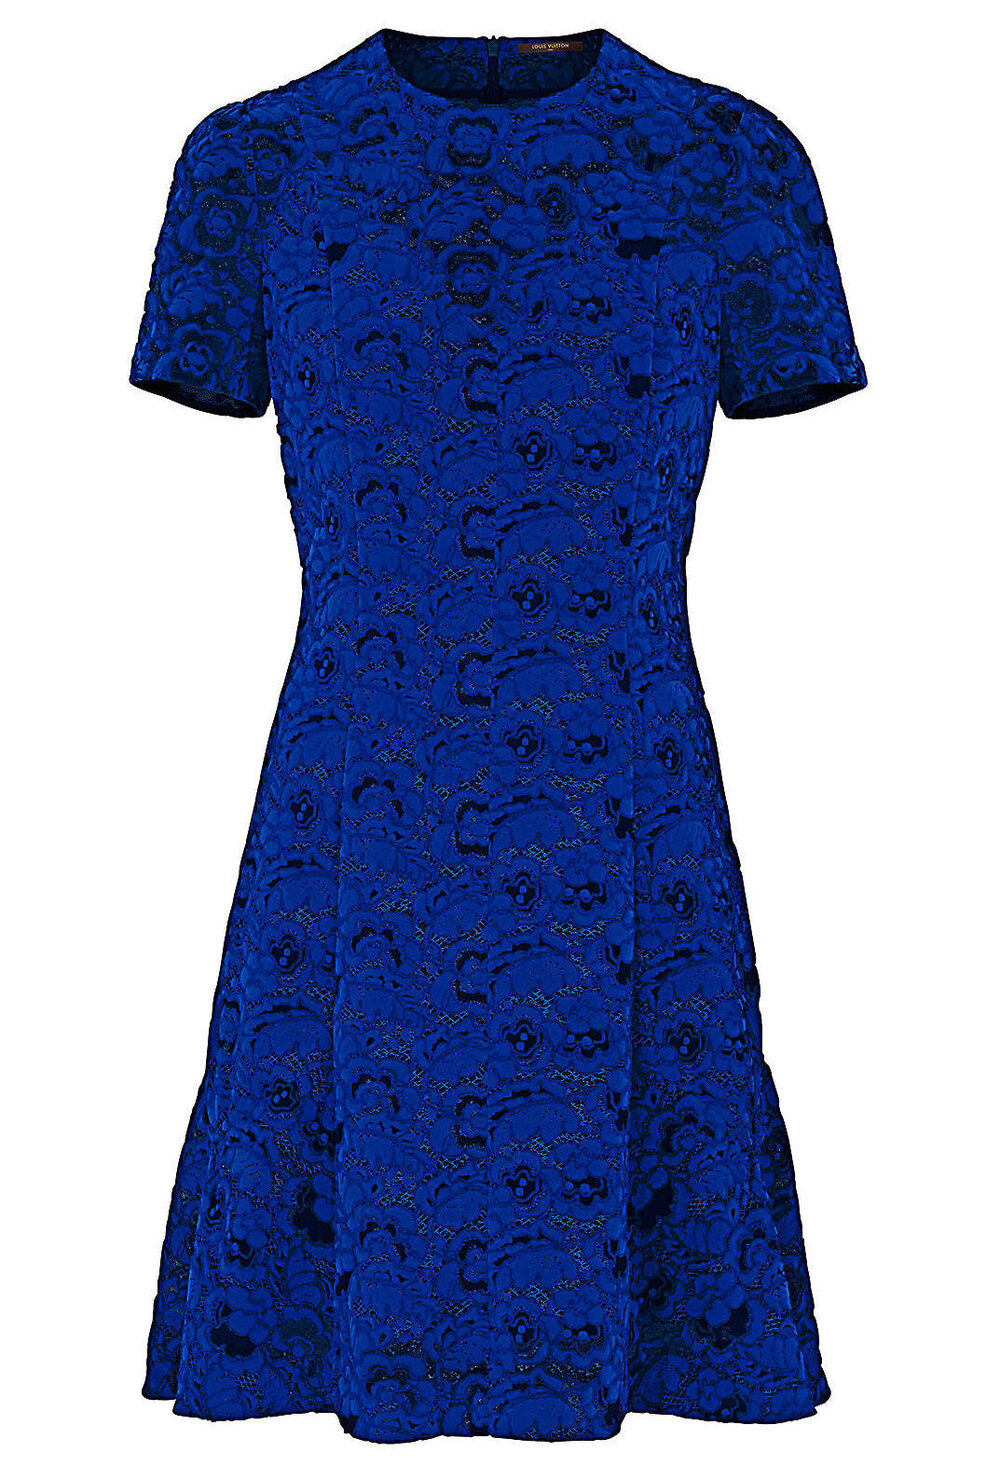 Louis Vuitton Blue Tweed Skater Dress, Blue, 40